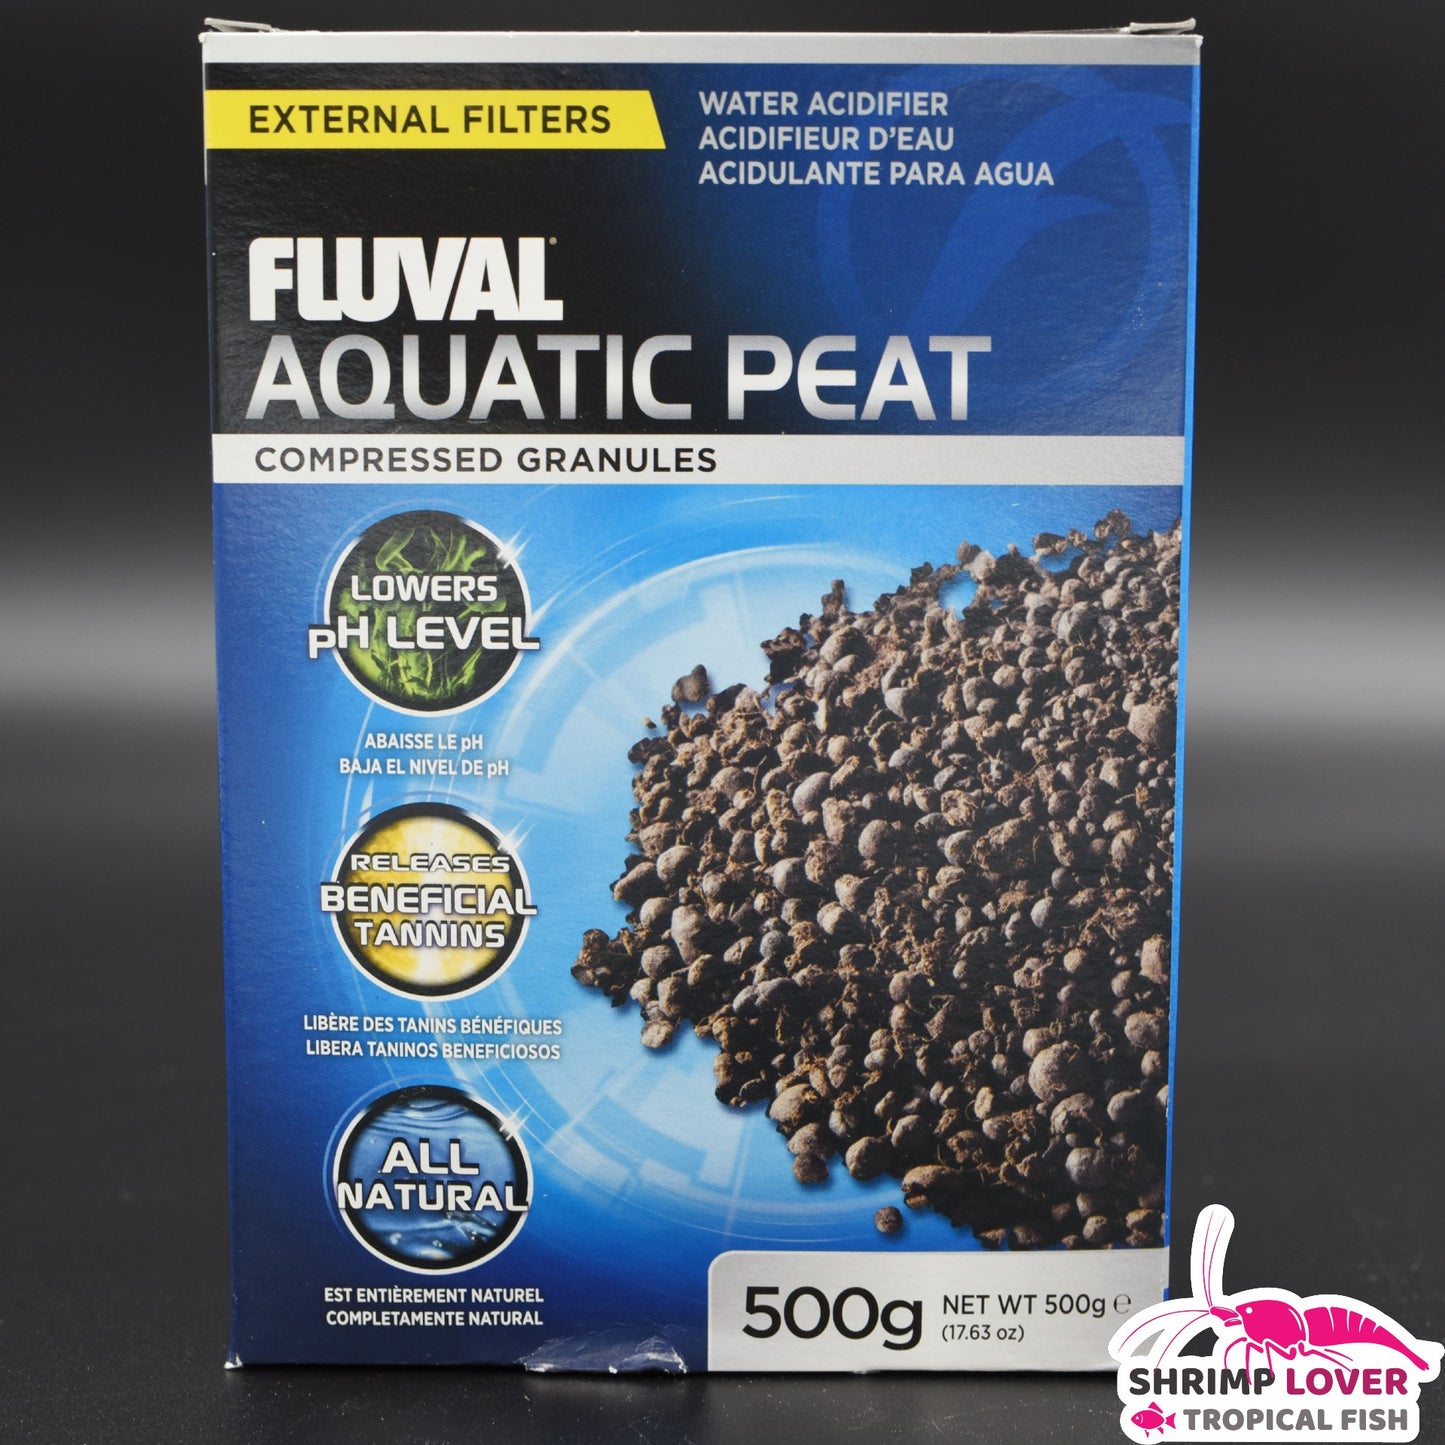  Fluval Aquatic Peat Granules, Chemical Filter Media